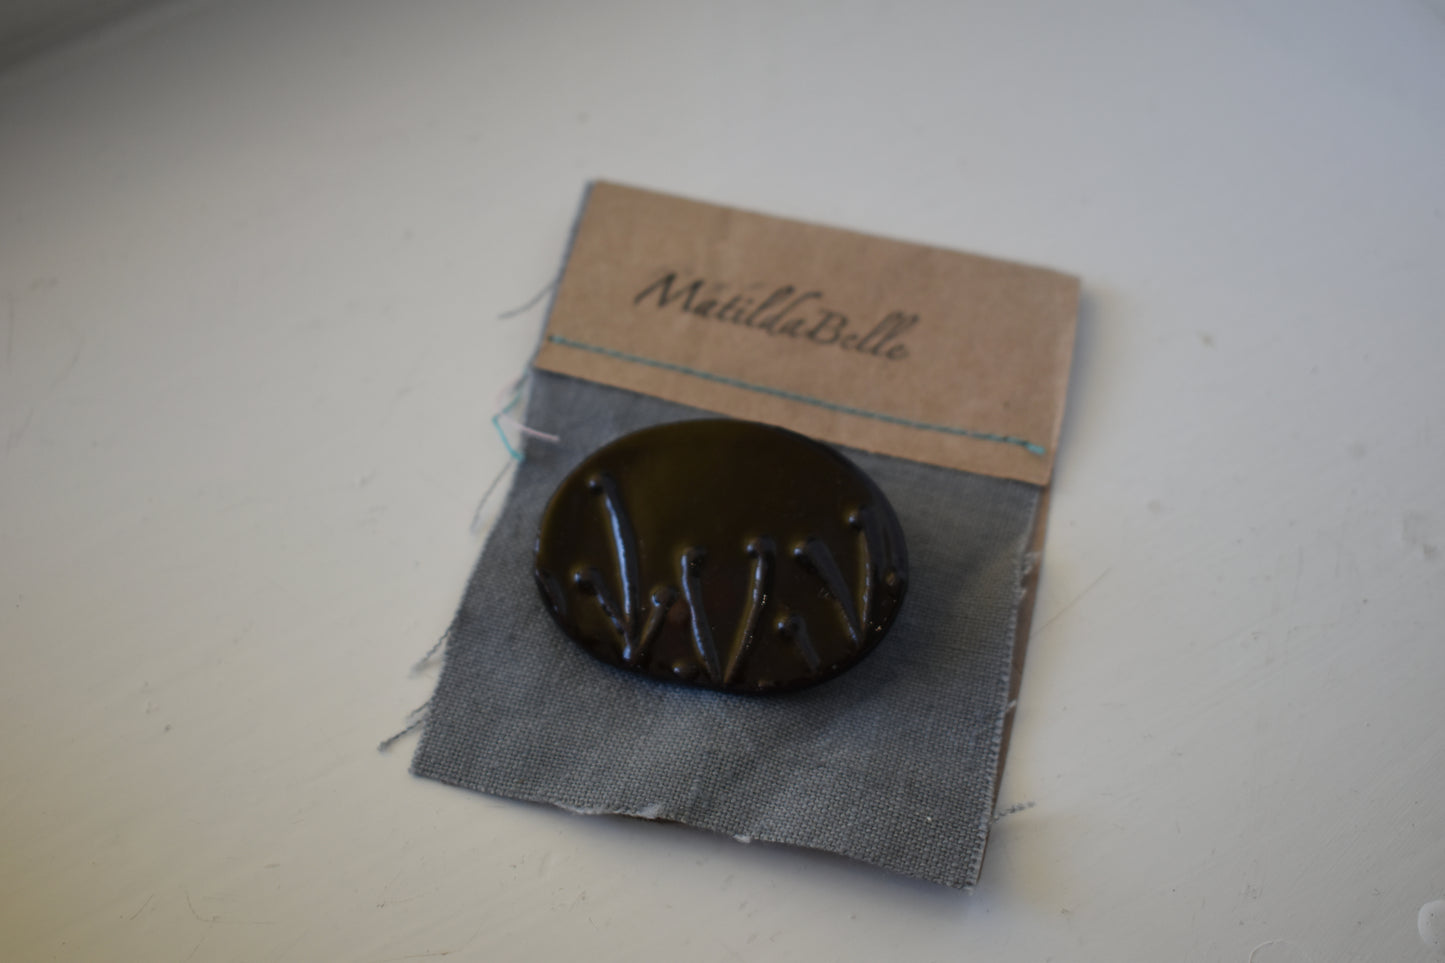 Matilda Belle Ceramic Jewellery - black/brown oval seagrass brooch